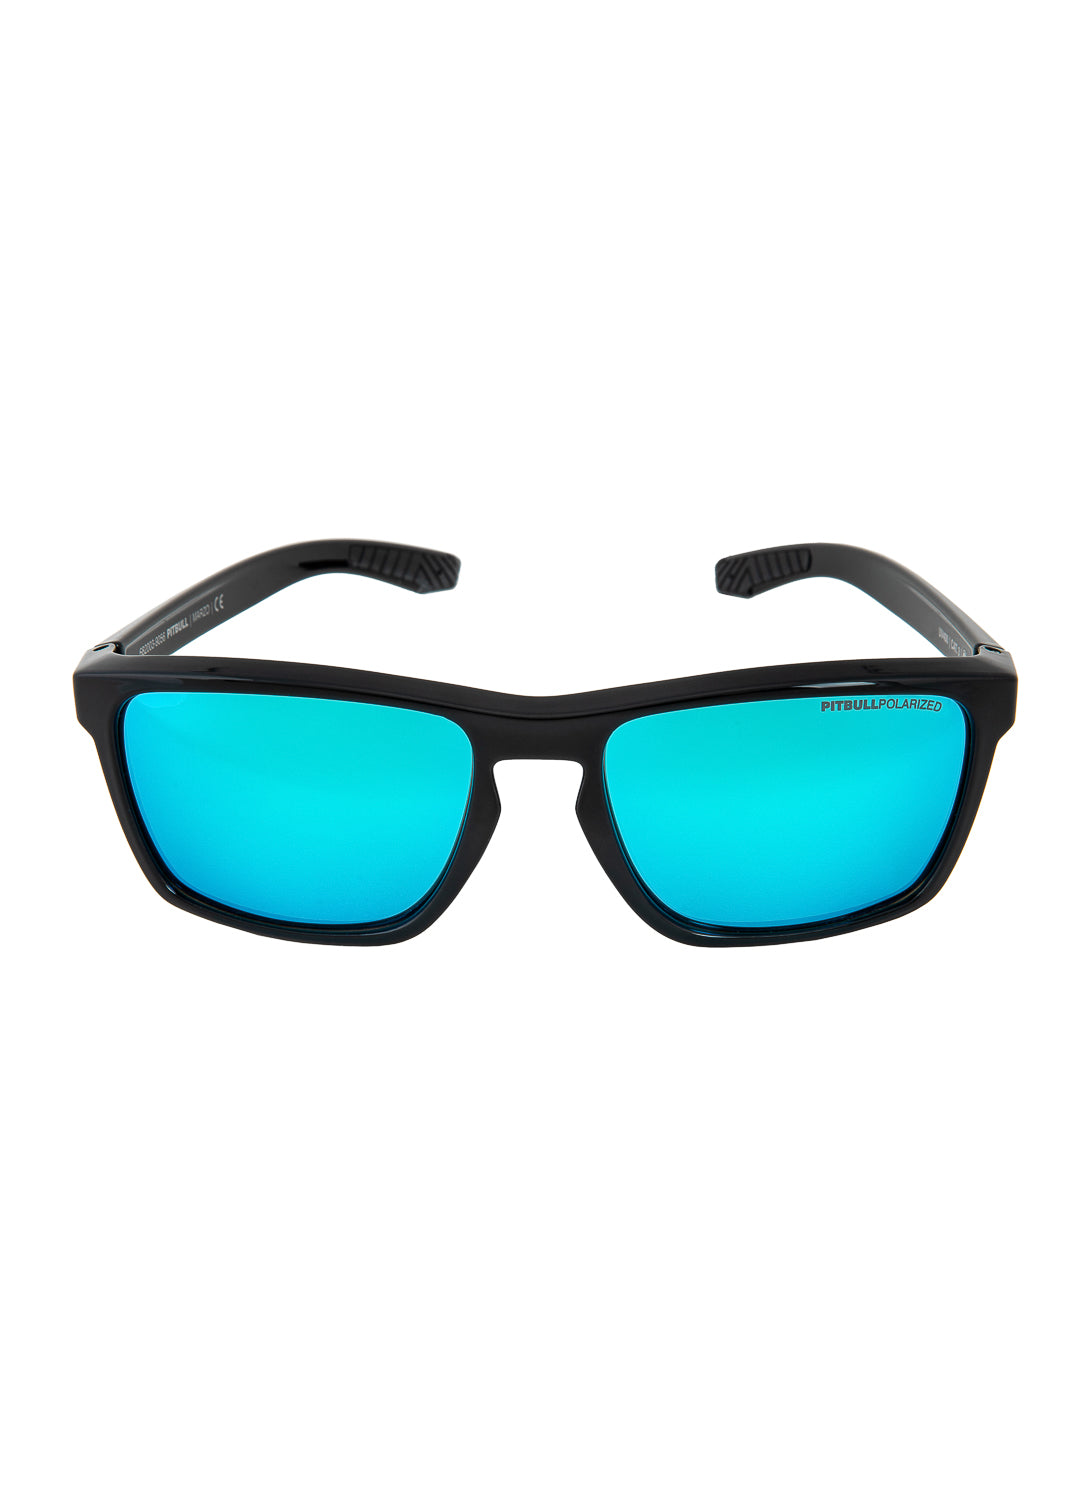 Sunglasses MARZO Black/Blue - Pitbull West Coast International Store 